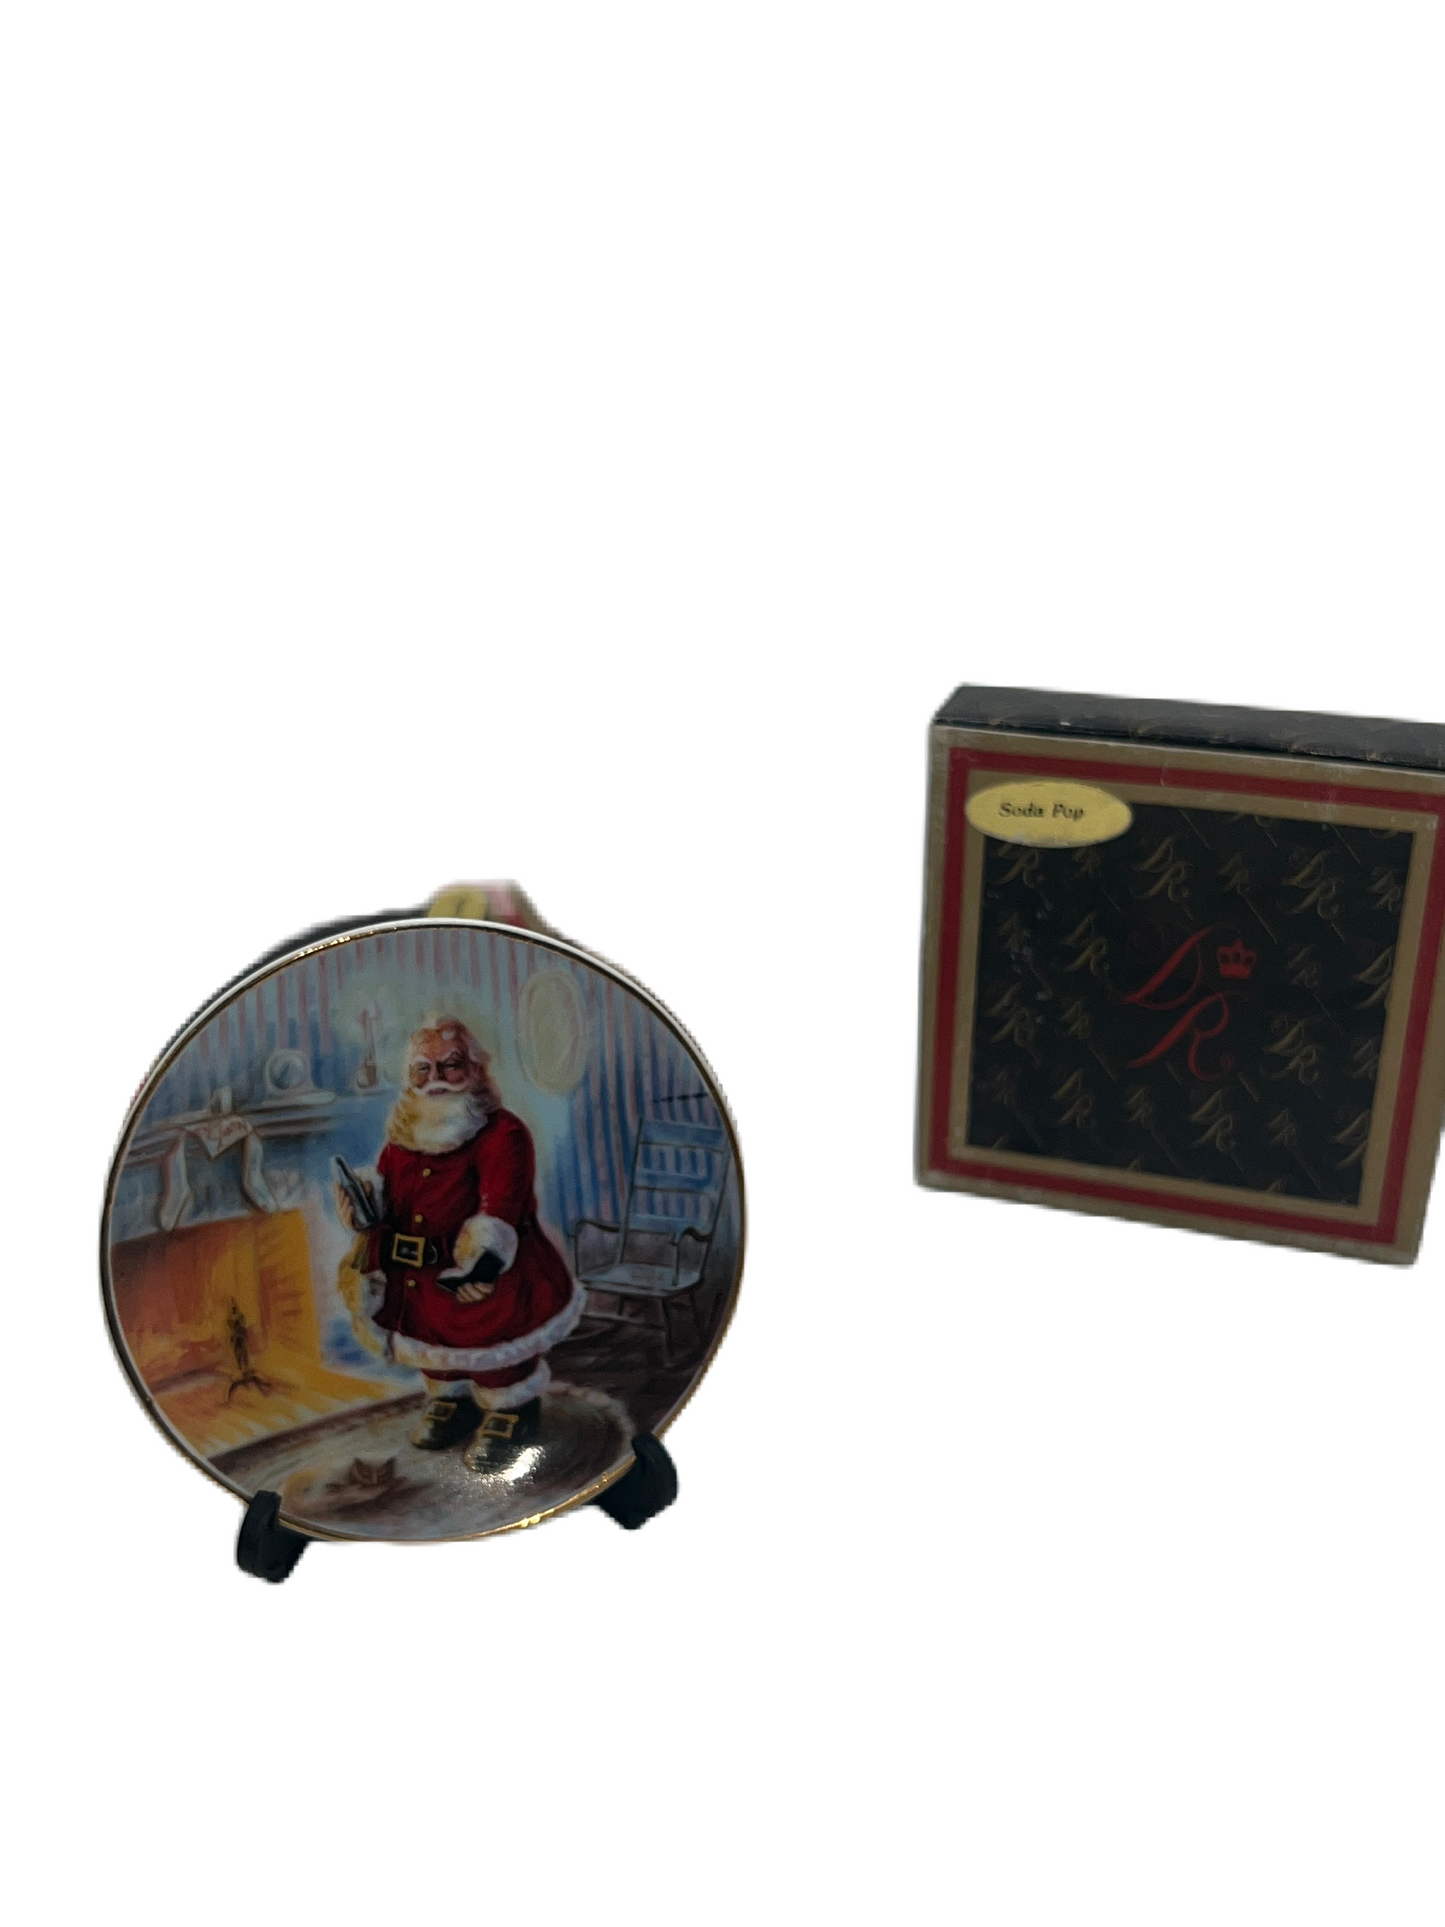 Duncan Royale Soda Pop Santa & Nast Santa Claus Christmas Decoration Mini Plate Ornament 1991